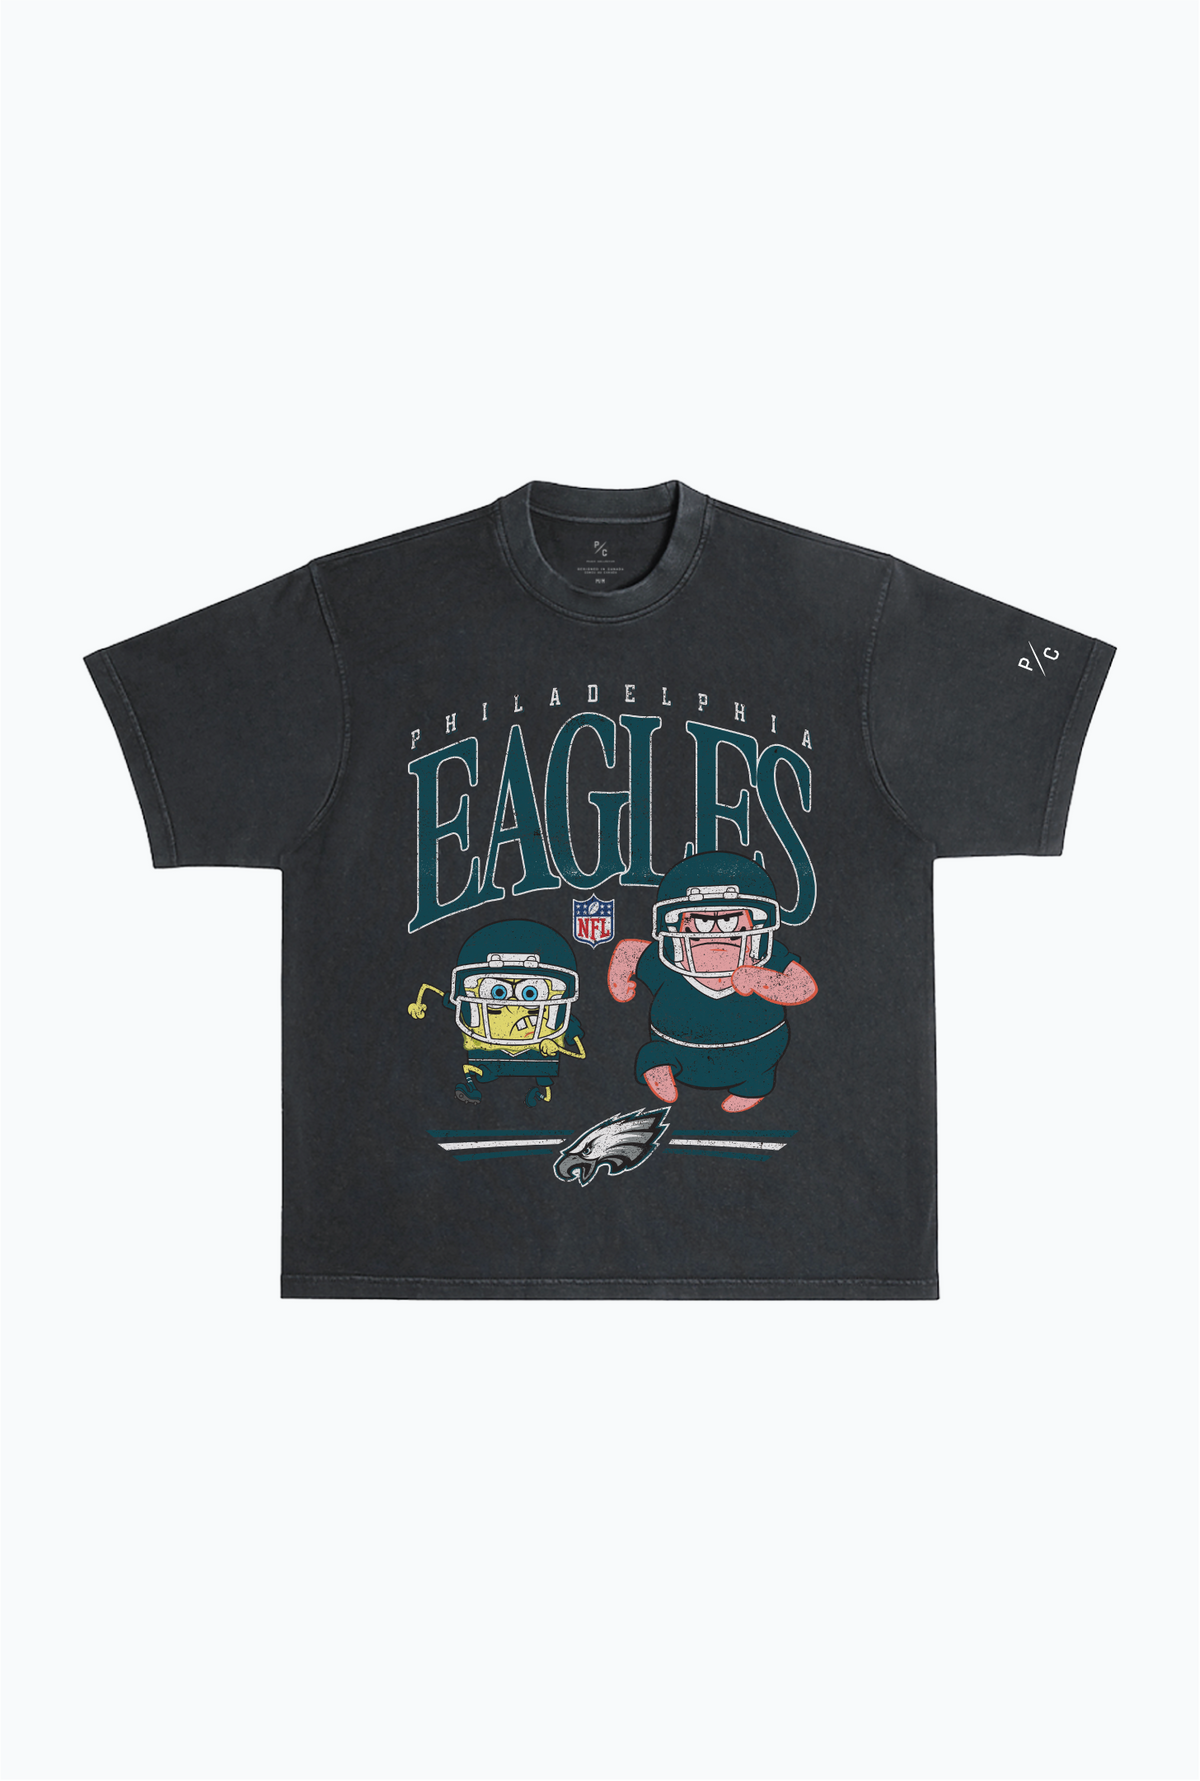 Spongebob & Patrick Rush Heavy Pigment Dye T-Shirt - Philadelphia Eagles